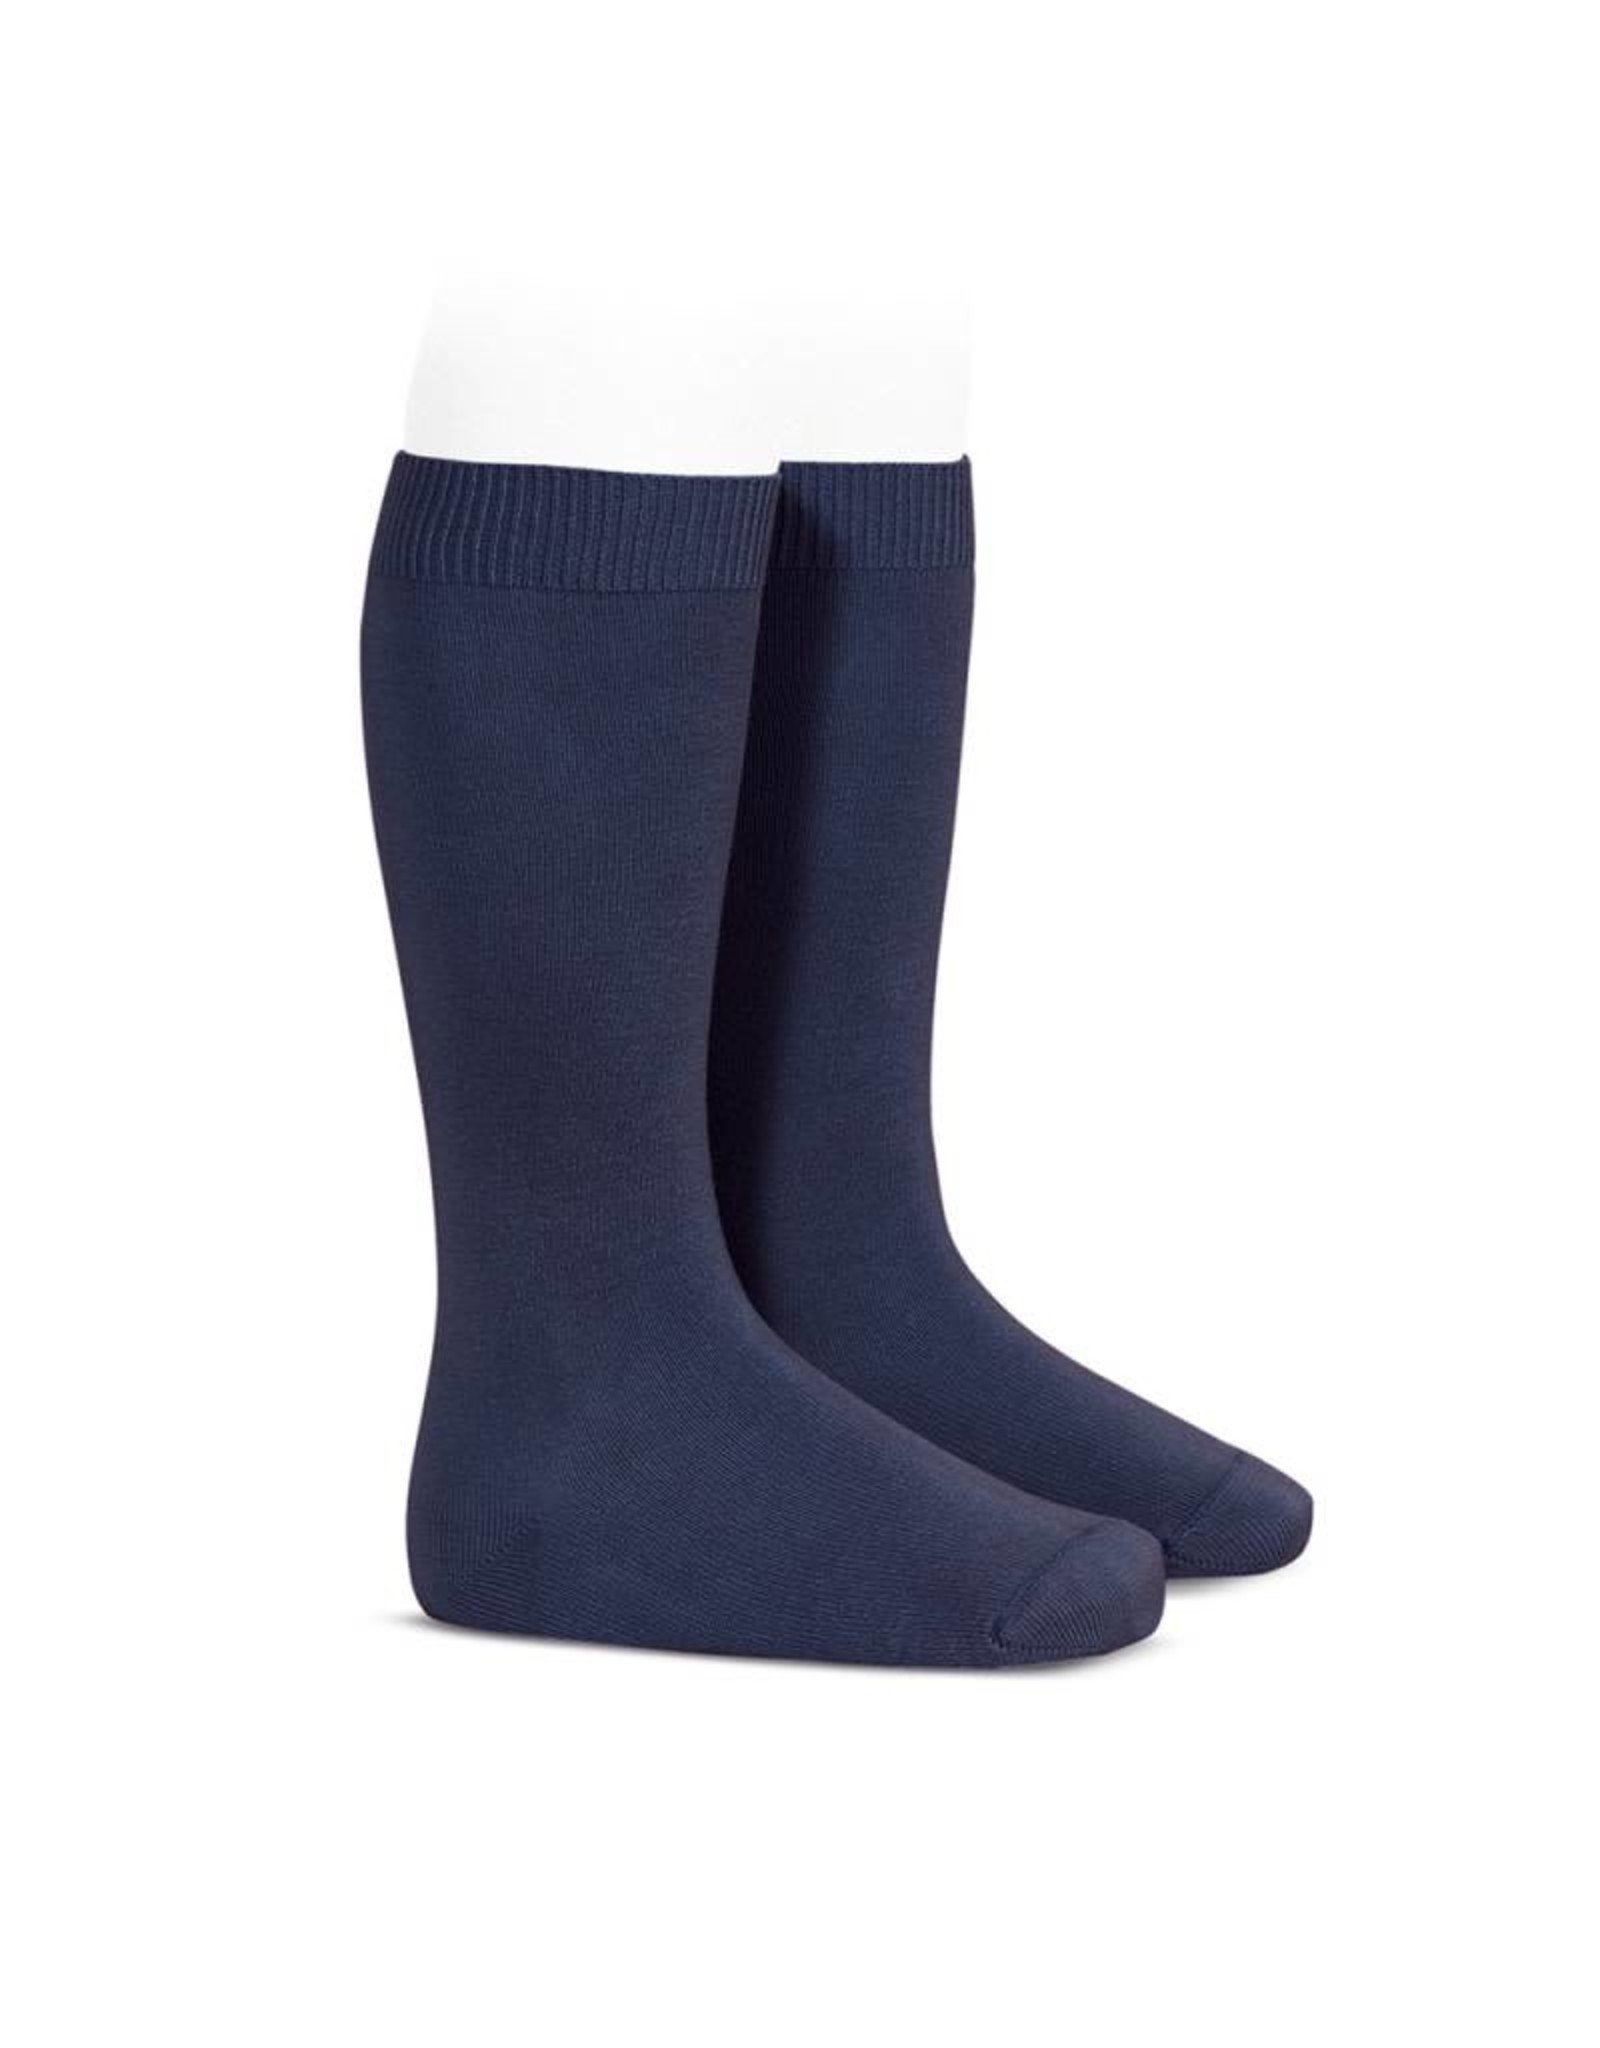 CONDOR Navy Plain Knee High Socks